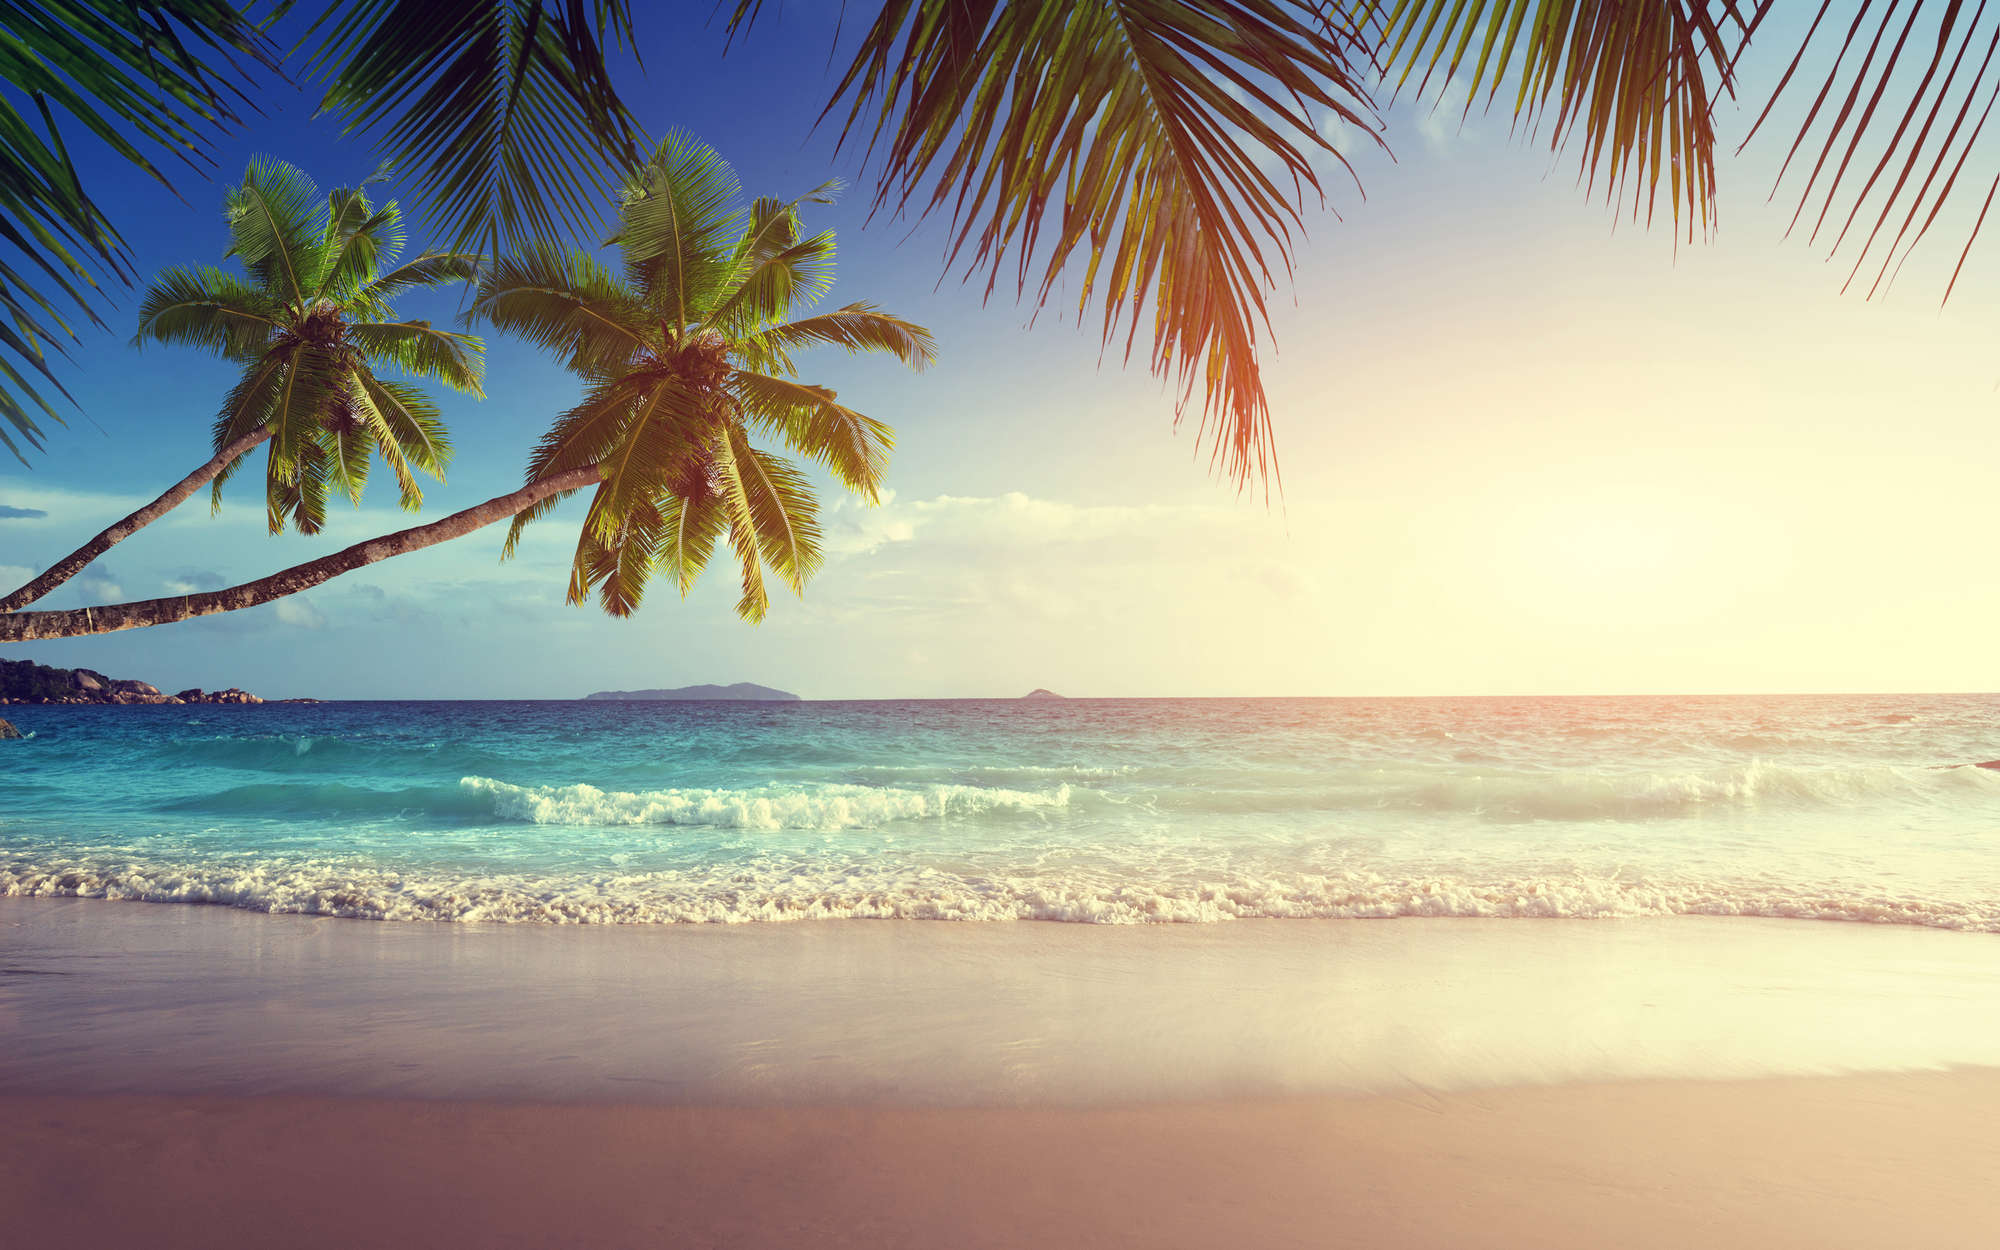             Fototapete Seychellen mit Palmen – Mattes Glattvlies
        